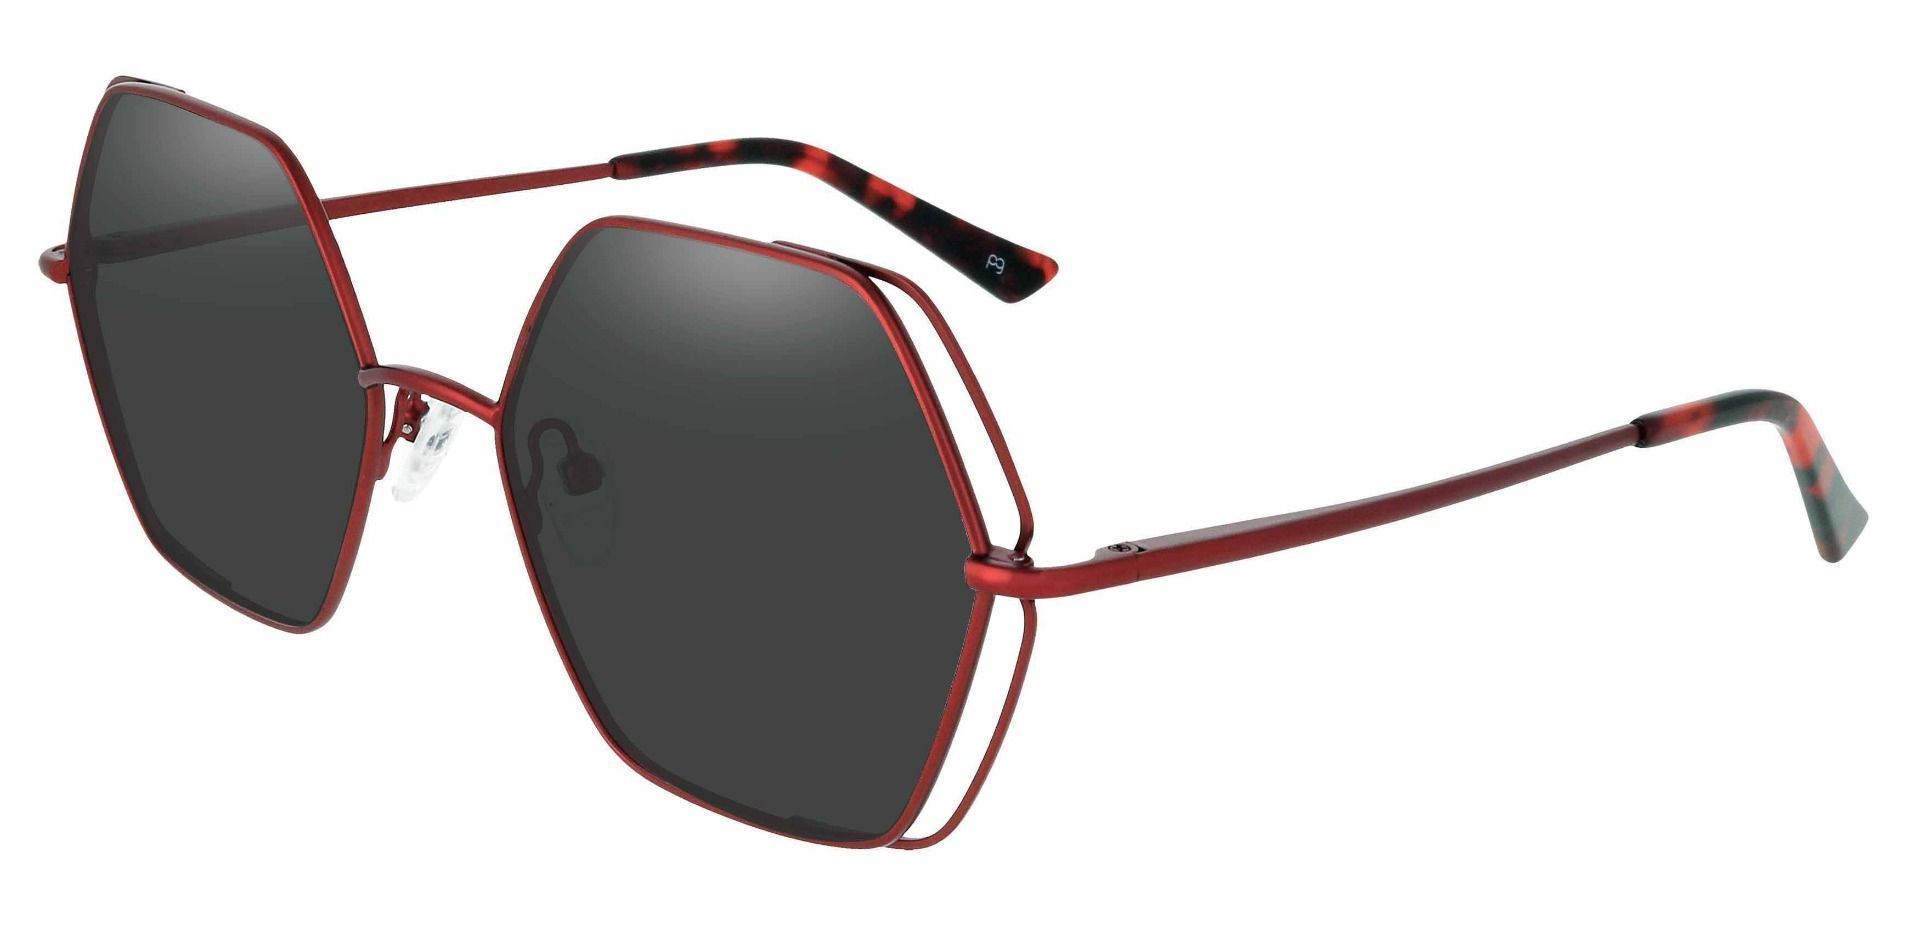 Hawley Geometric Prescription Sunglasses - Red Frame With Gray Lenses